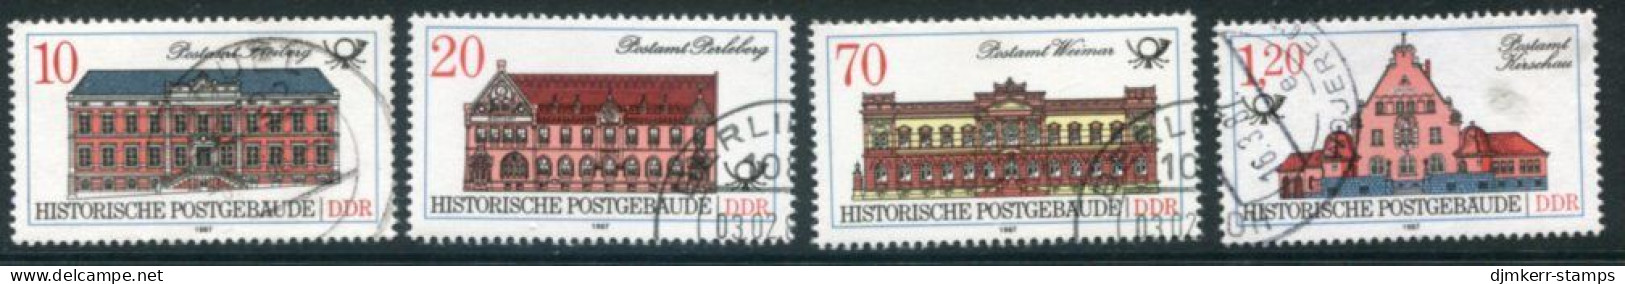 DDR 1987 Historic Postal Buildings Singles Used.  Michel 3067-70 - Usados